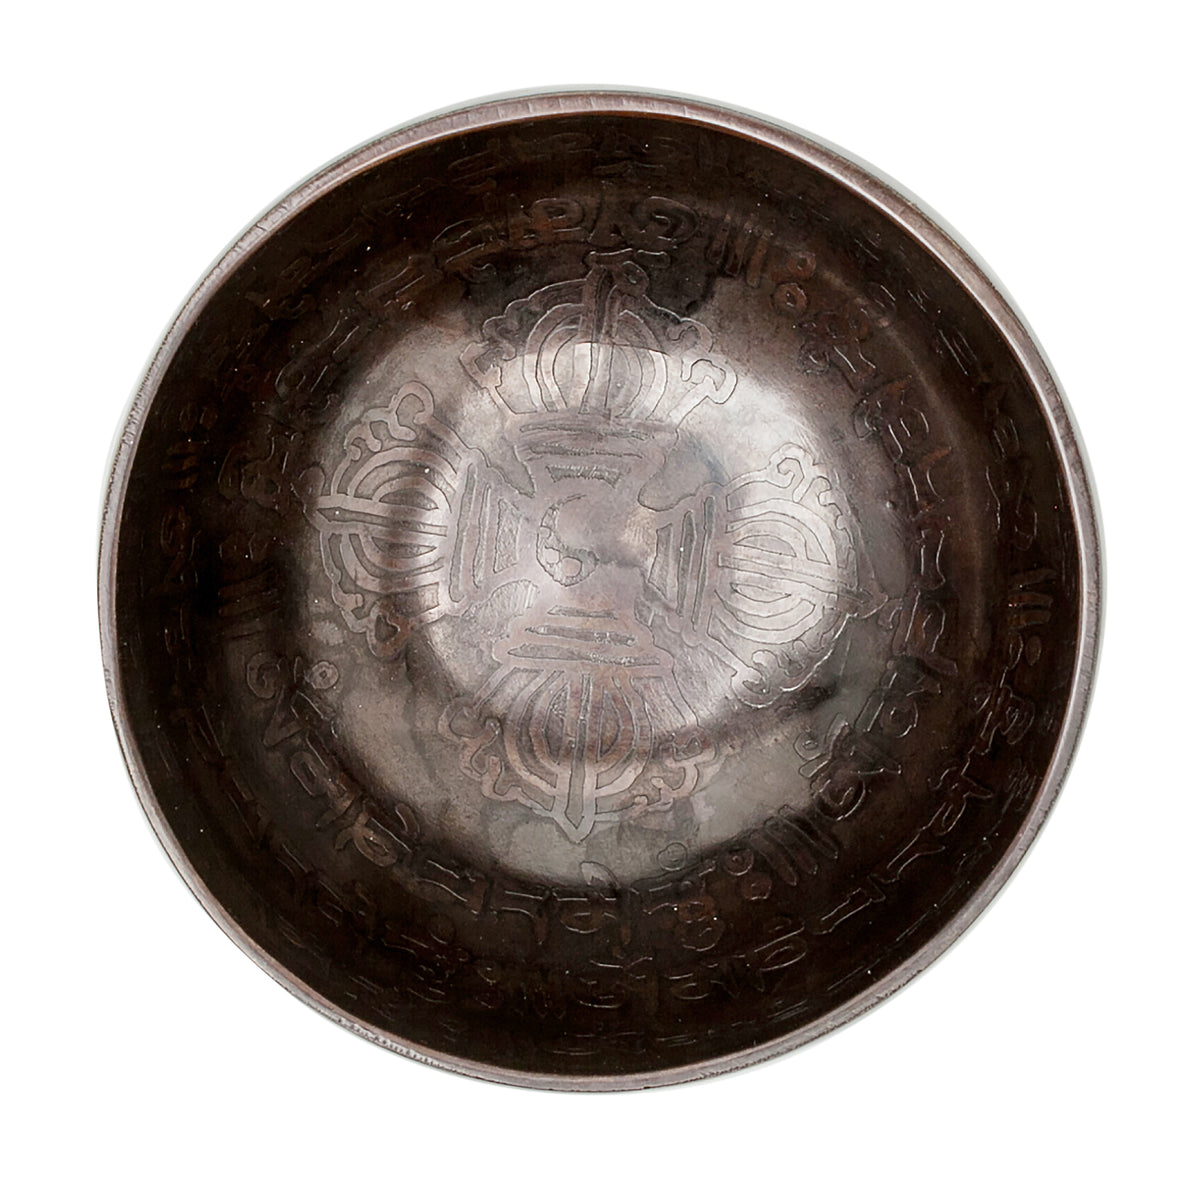 Small Infinity Bowl: 4 Inch Handmade Bronze Singing Bowl Matte Black Om Mani Padme Hum